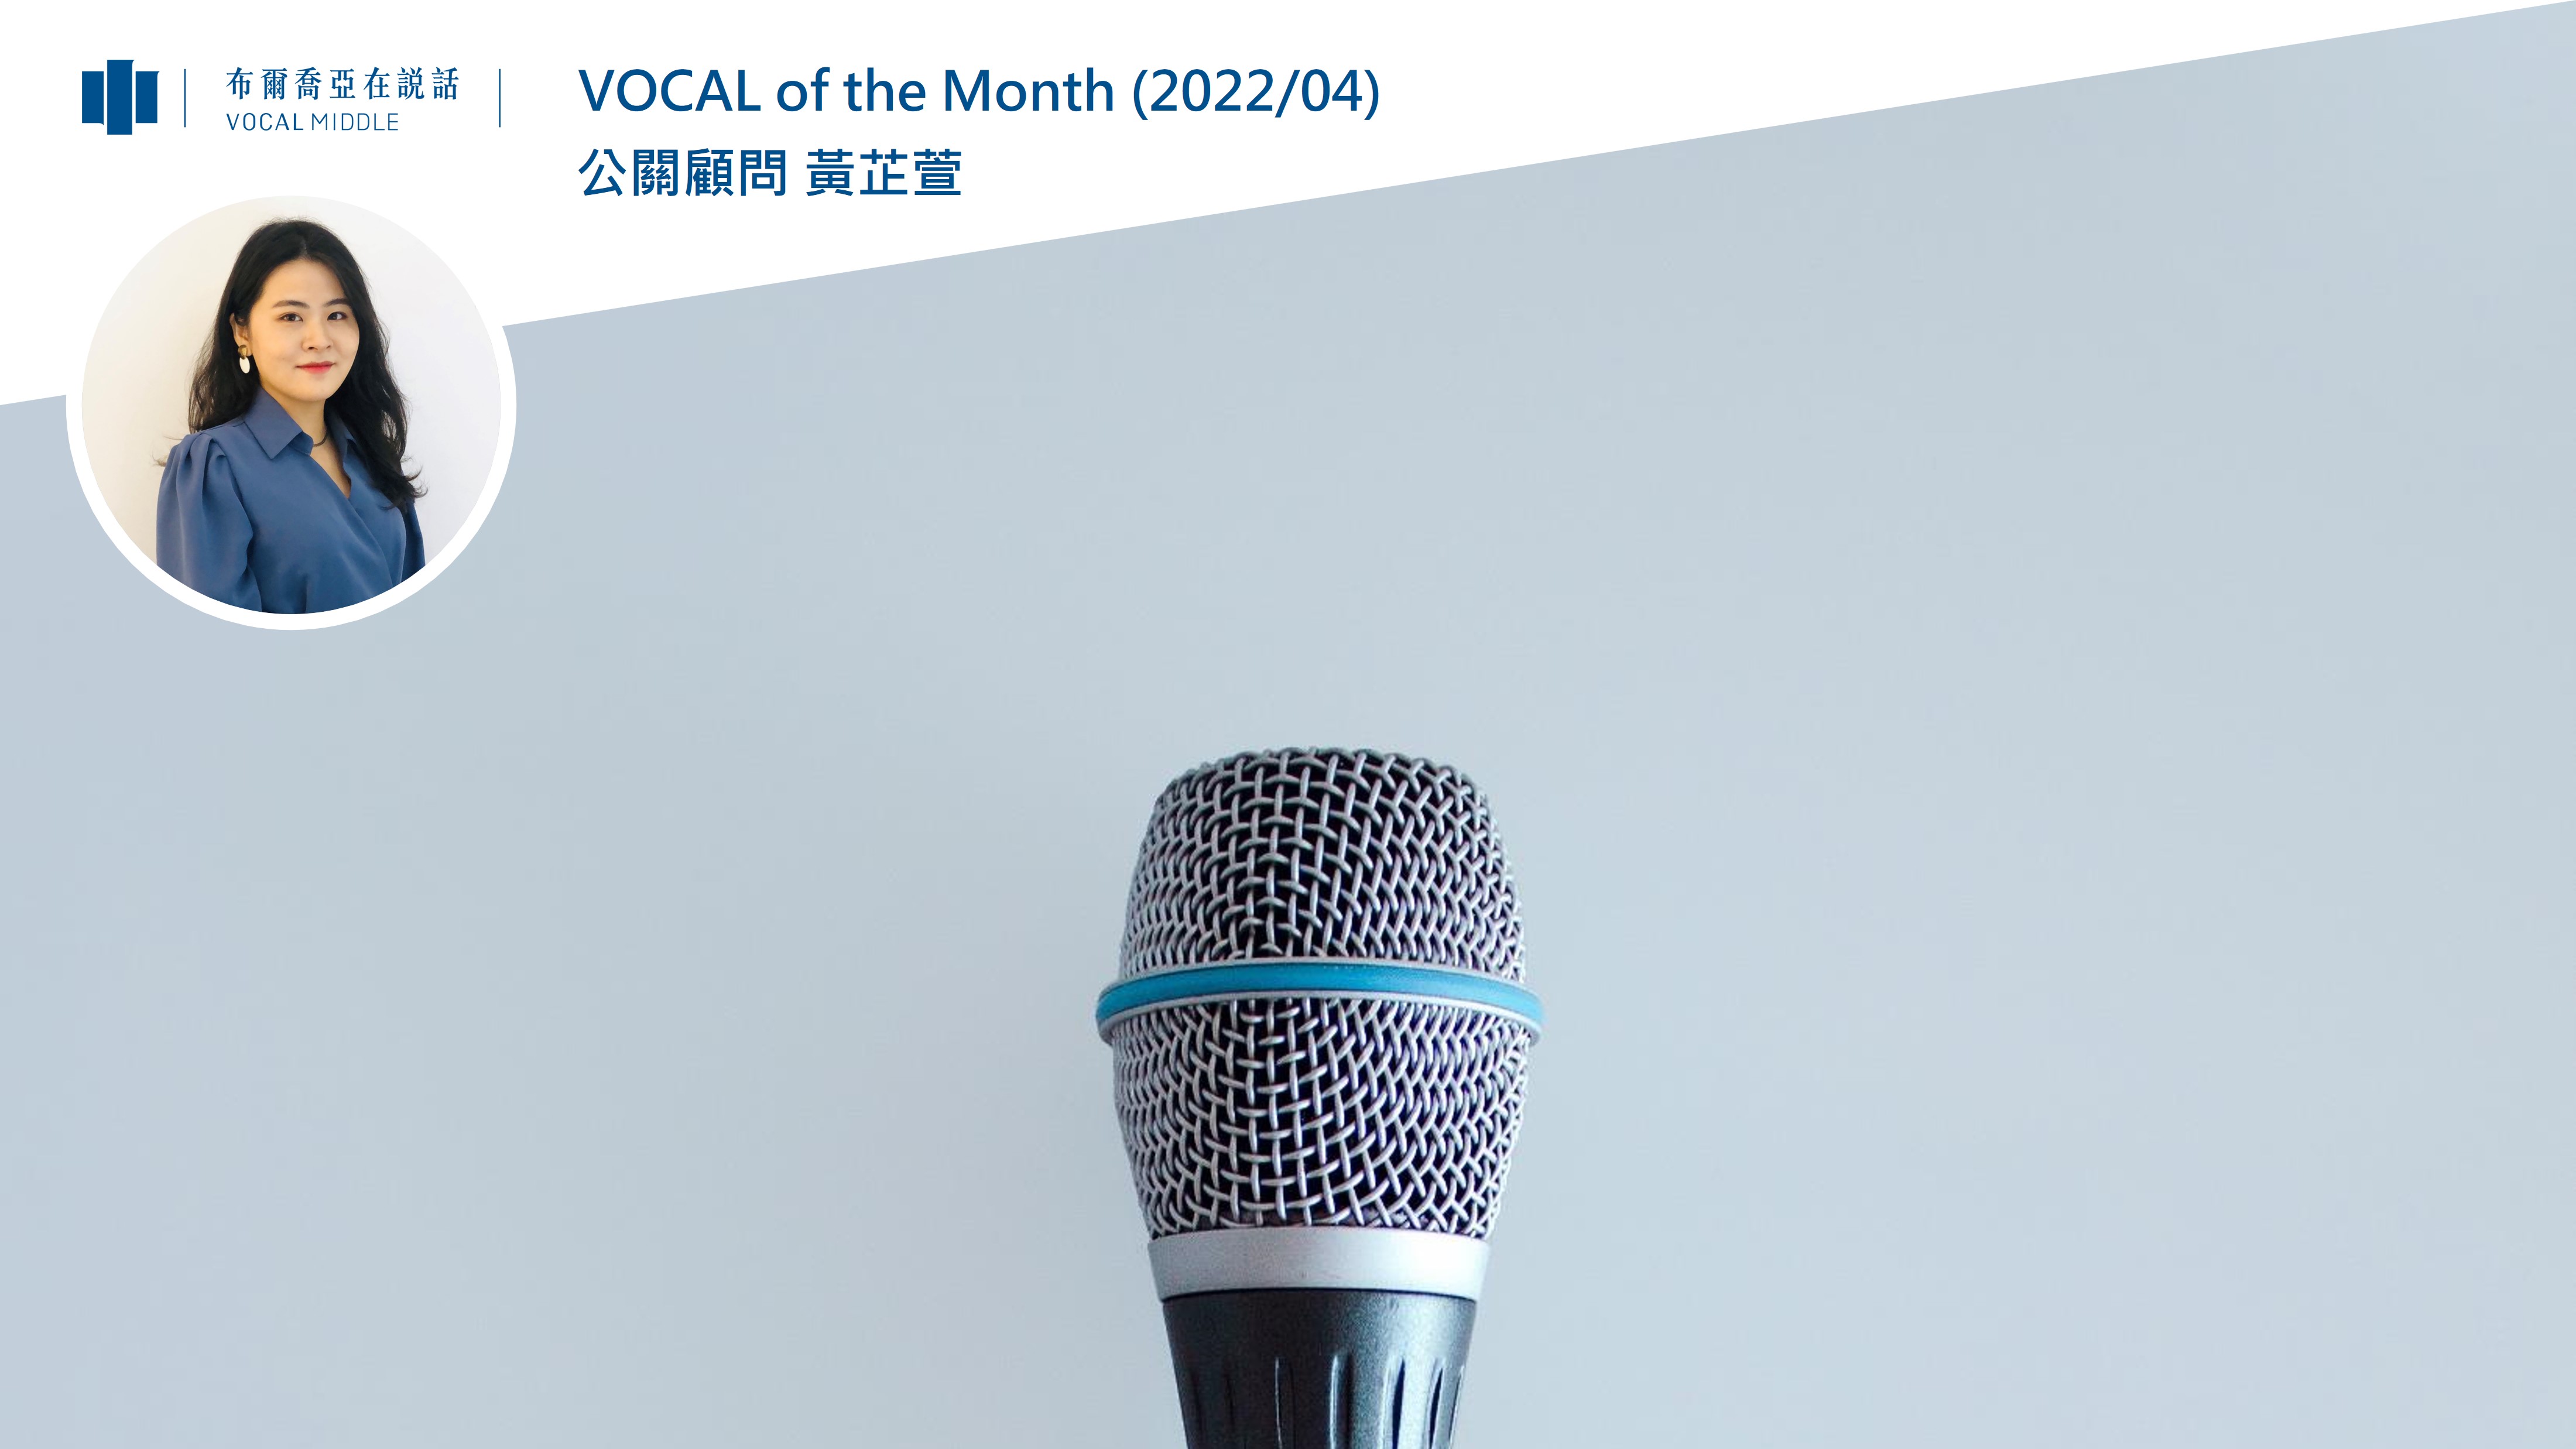 【VOCAL of the Month】Be the Vocal，多方面接觸市場，跨足市場、產業「插旗」溝通力 (2022/04)